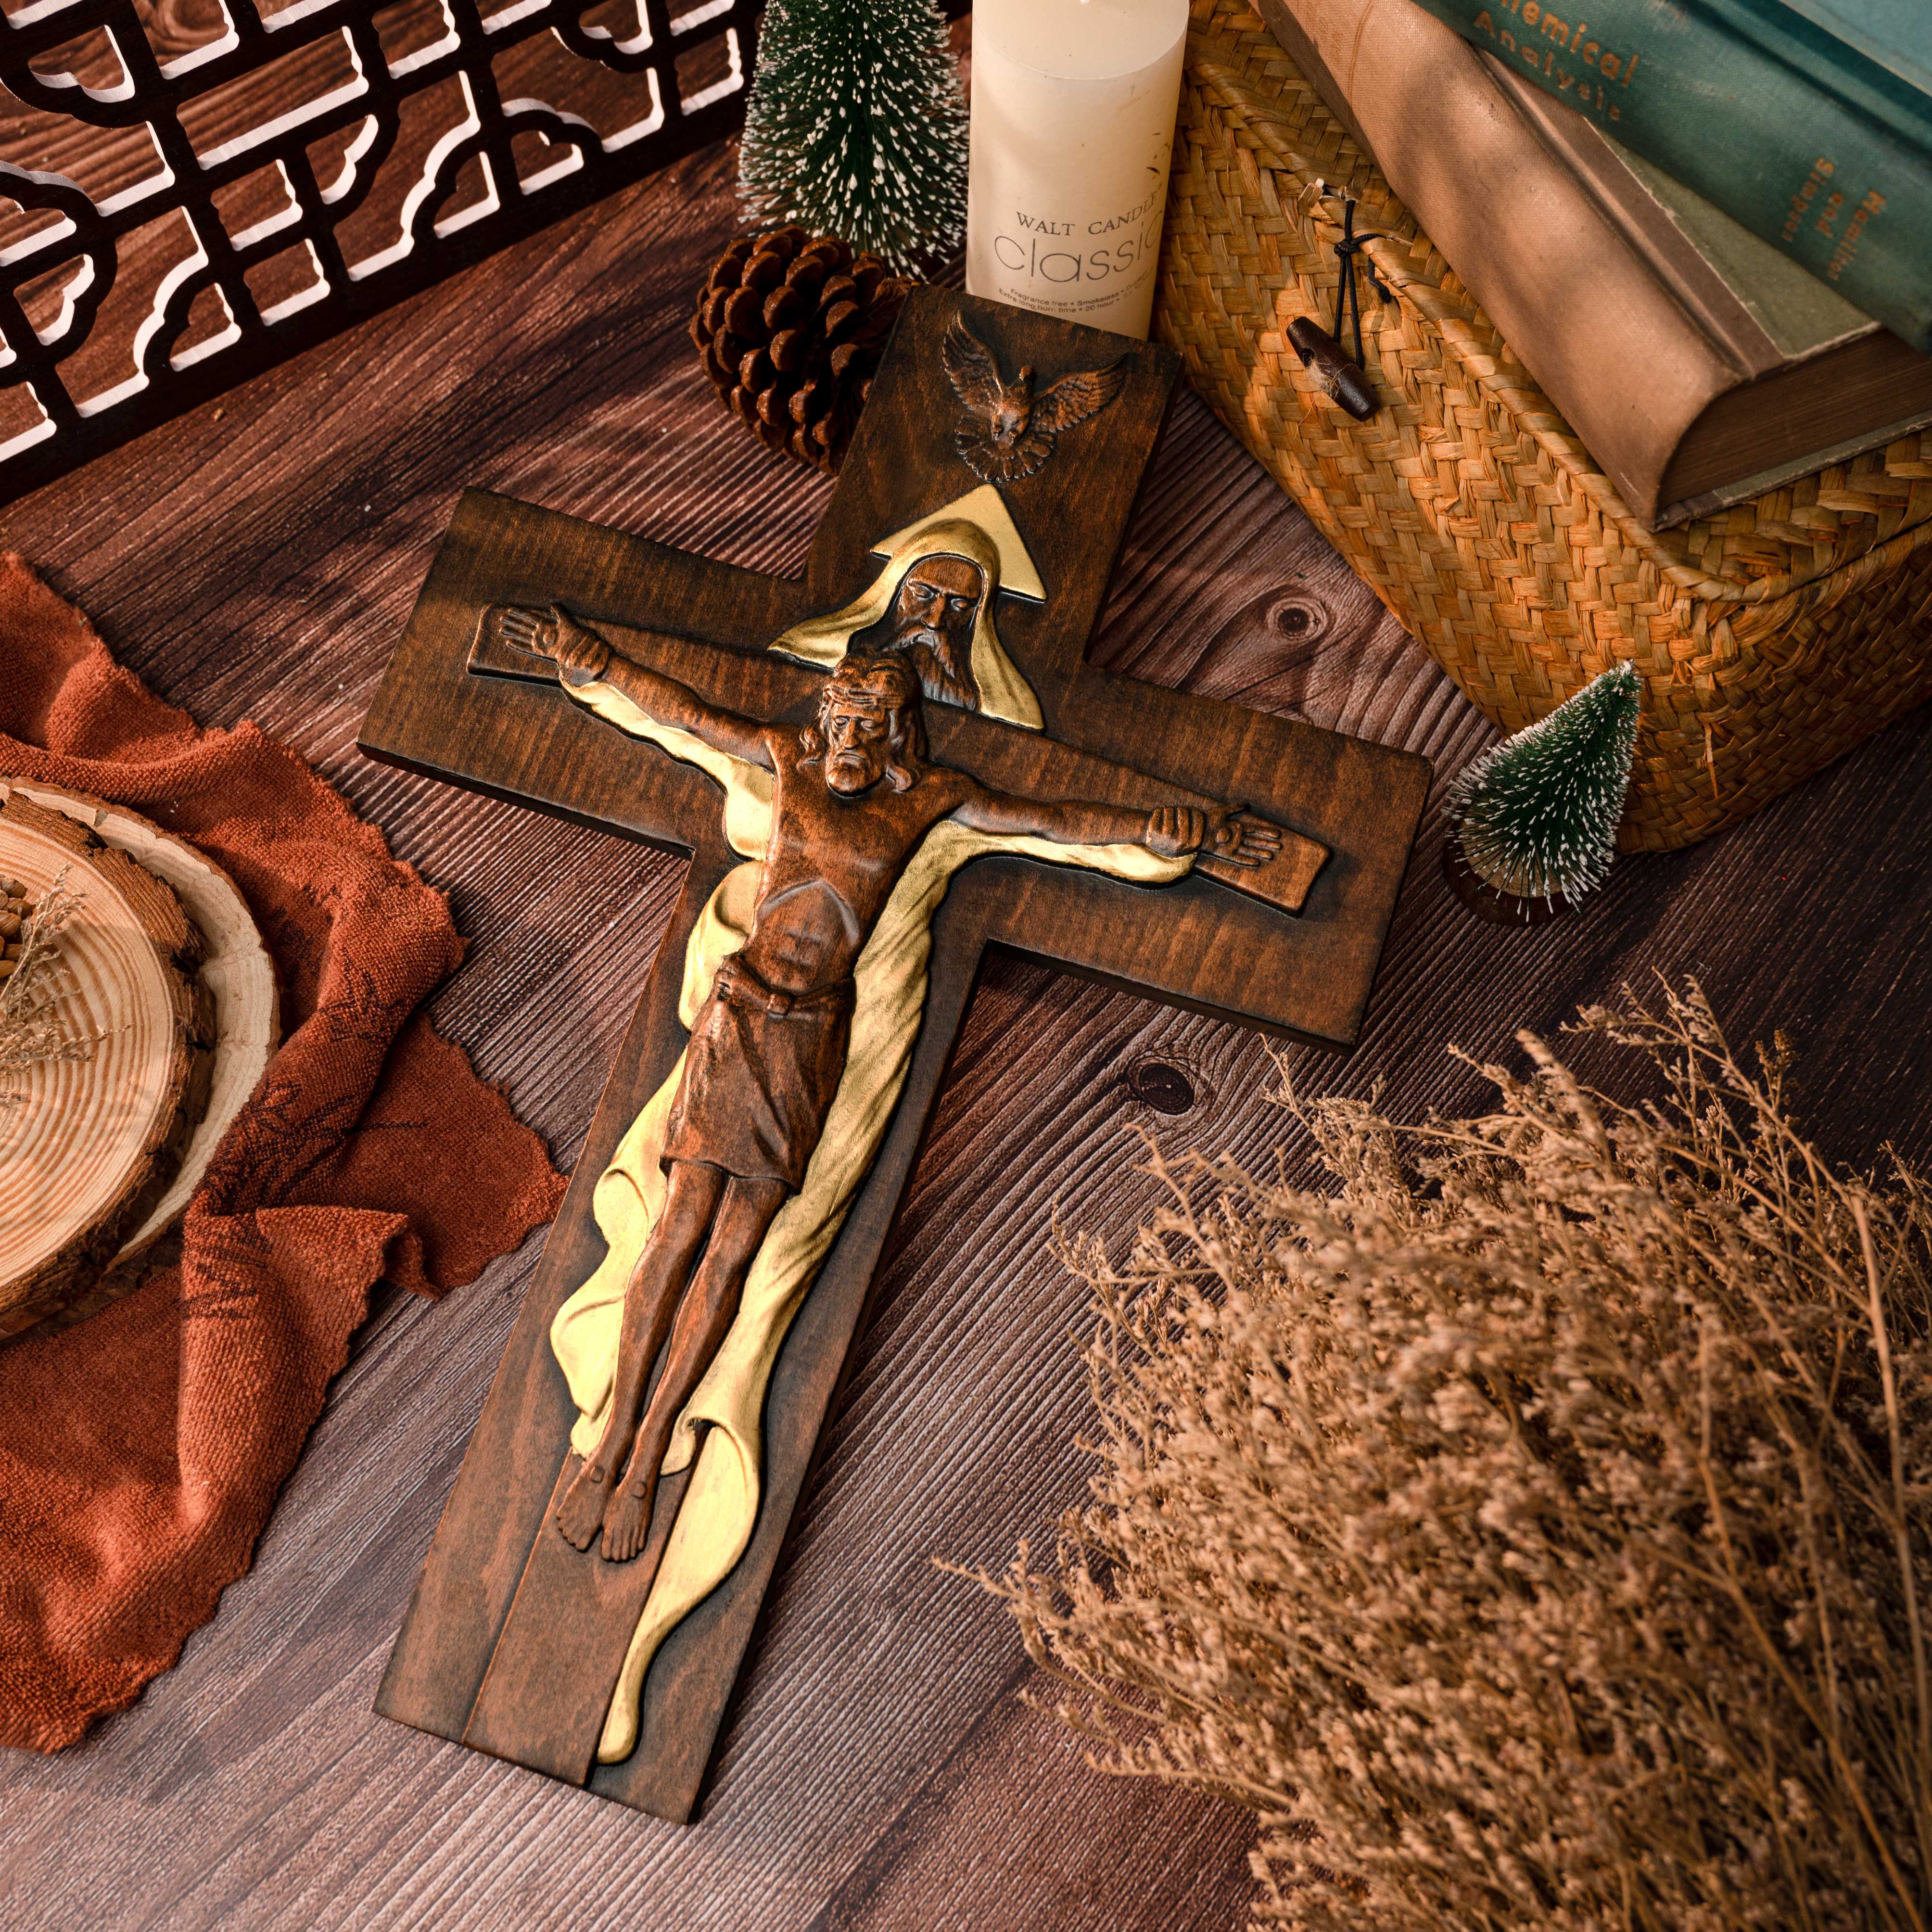 Ash wood Crucifix ，Jesus Christ, wooden Cross gift of love